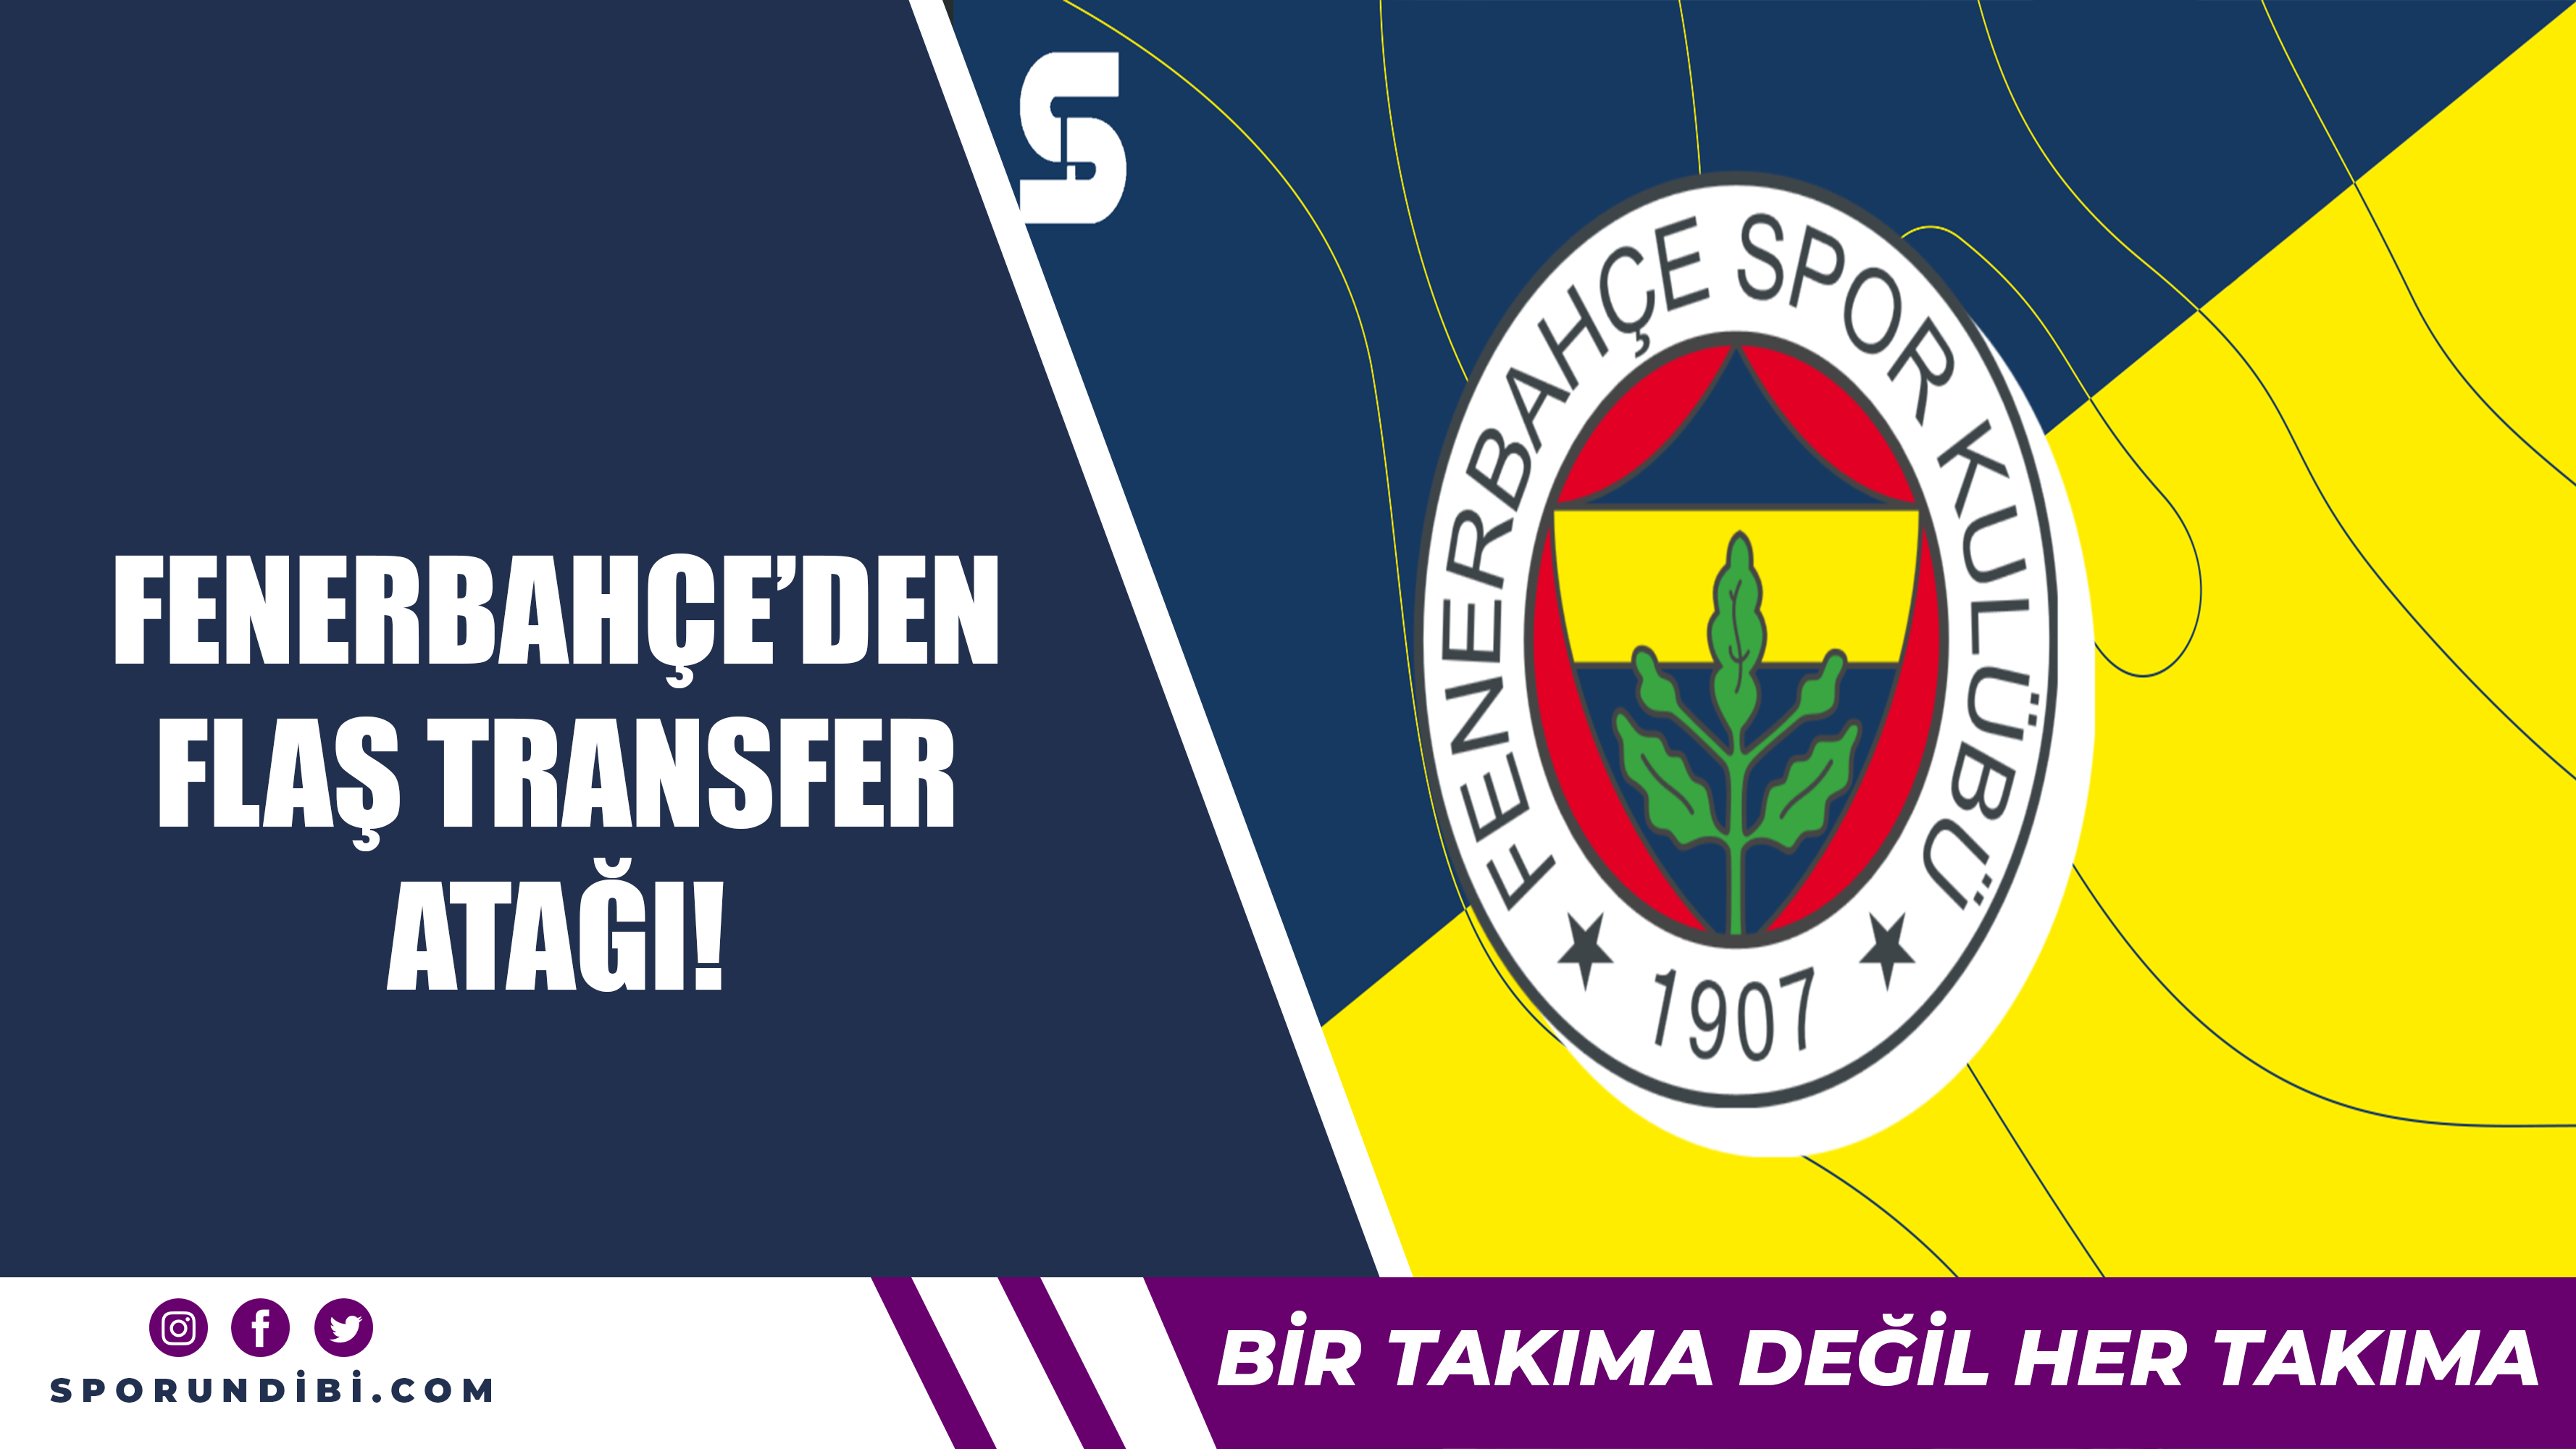 Fenerbahçe'den flaş transfer atağı!